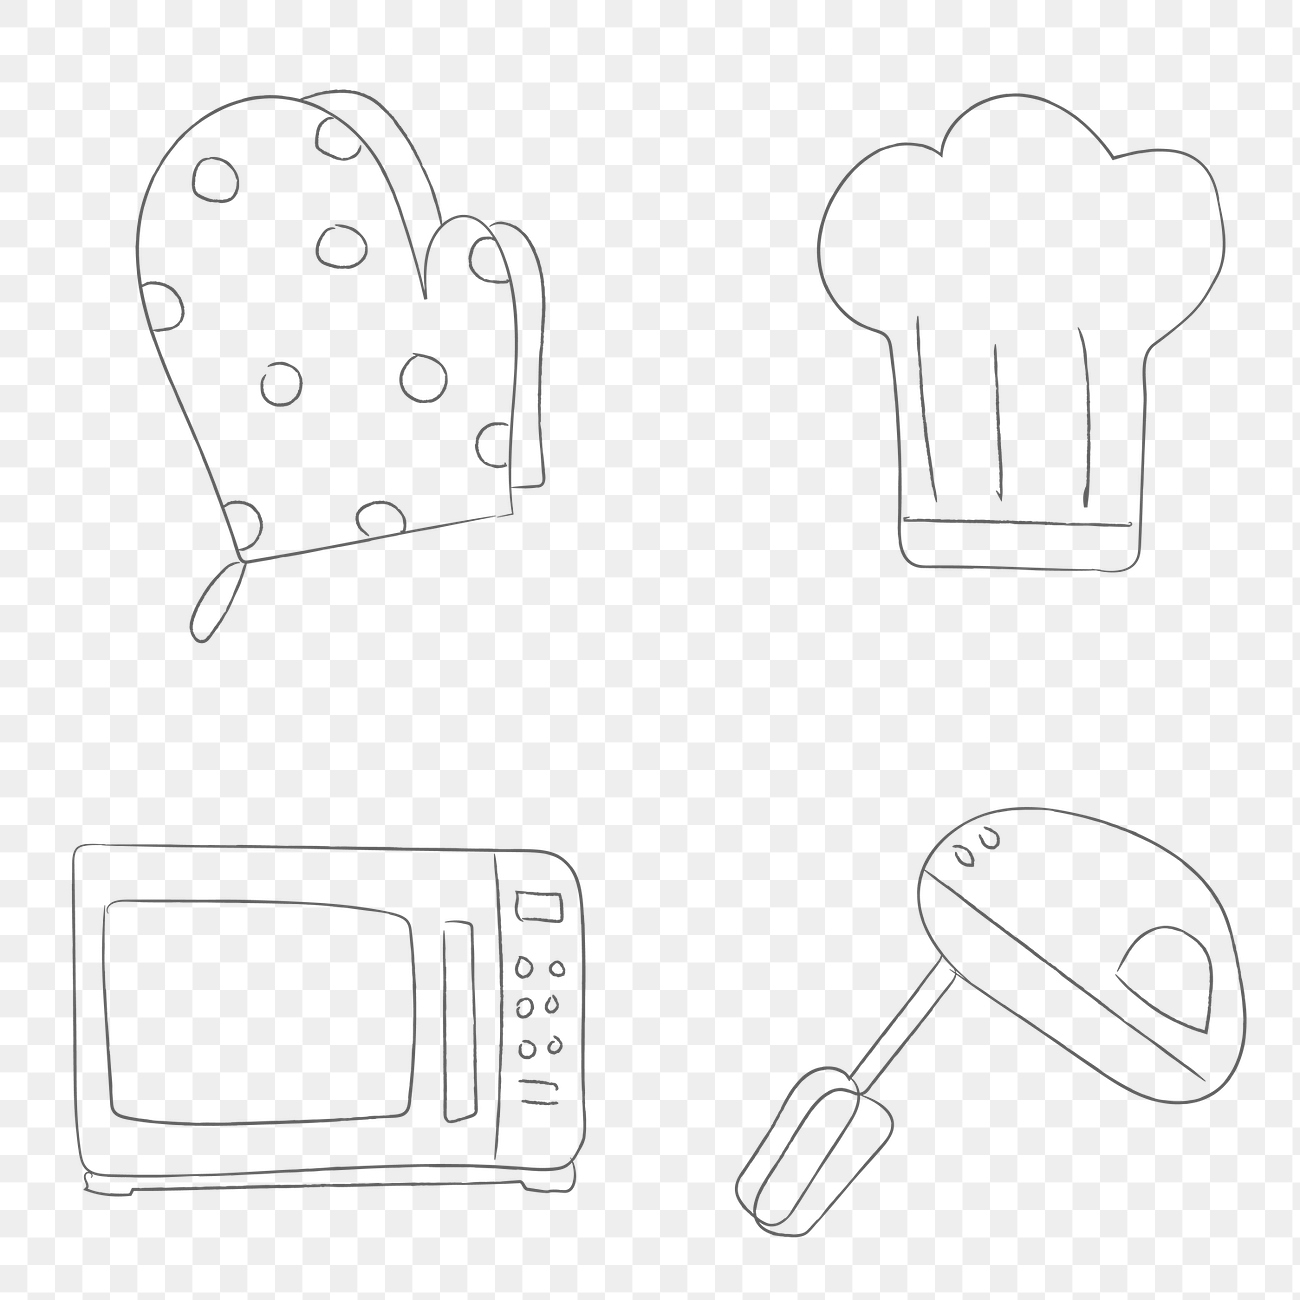 cute-cooking-utensils-doodle-stickers-premium-png-rawpixel